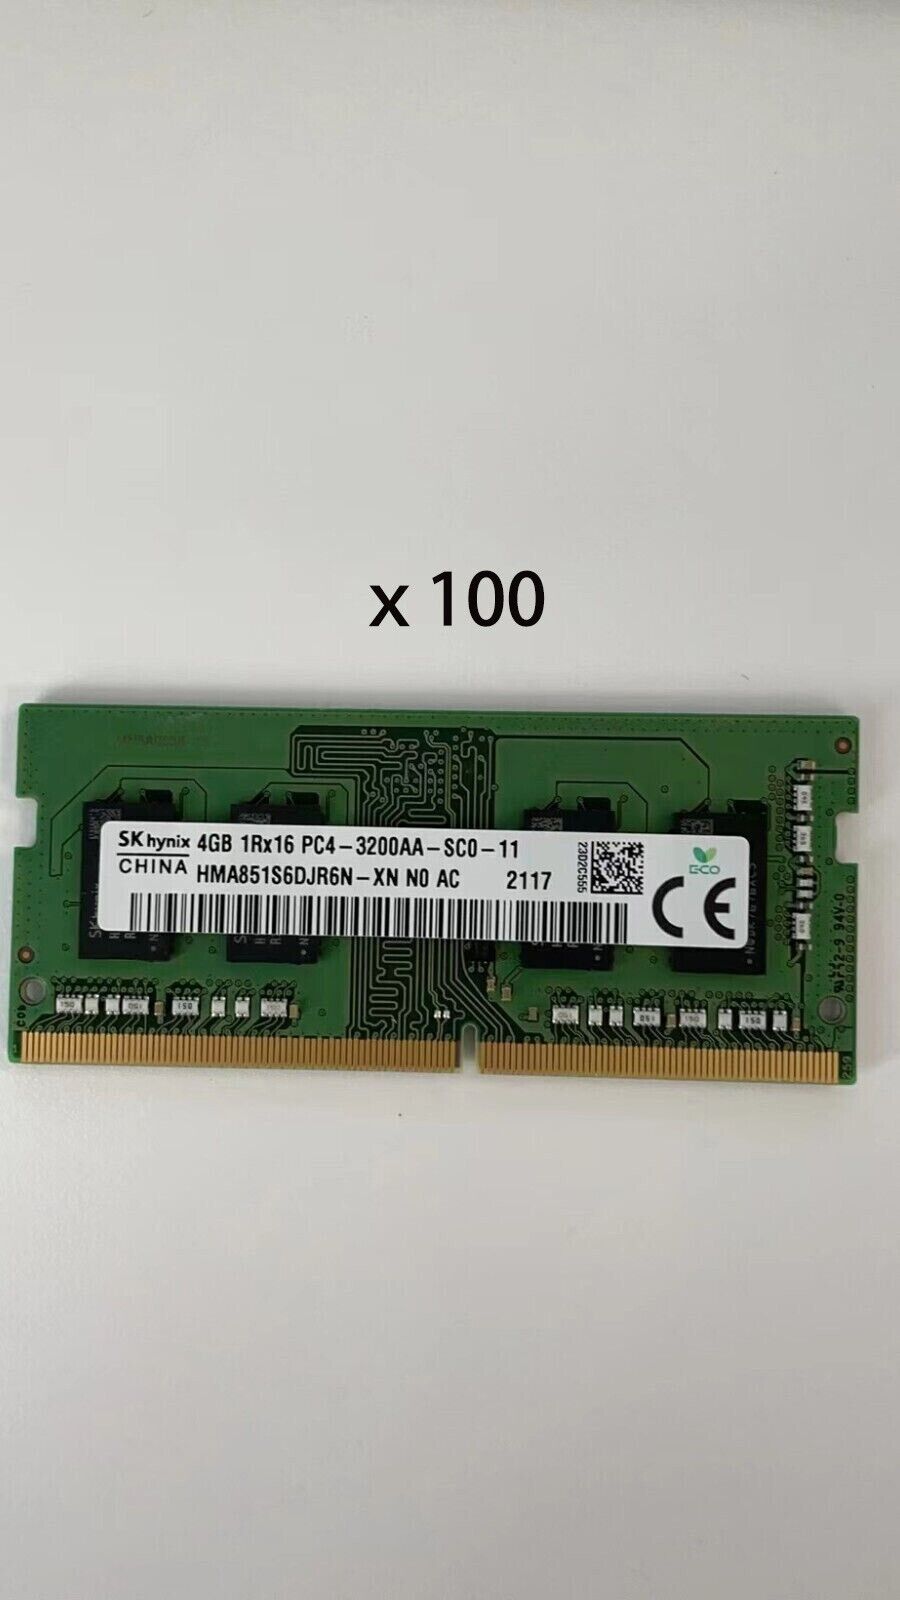 Lot of 100pcs SK Hynix 4GB DDR4 1R x 16 SODIMM 3200 MHZ RAM for Laptop/ PC